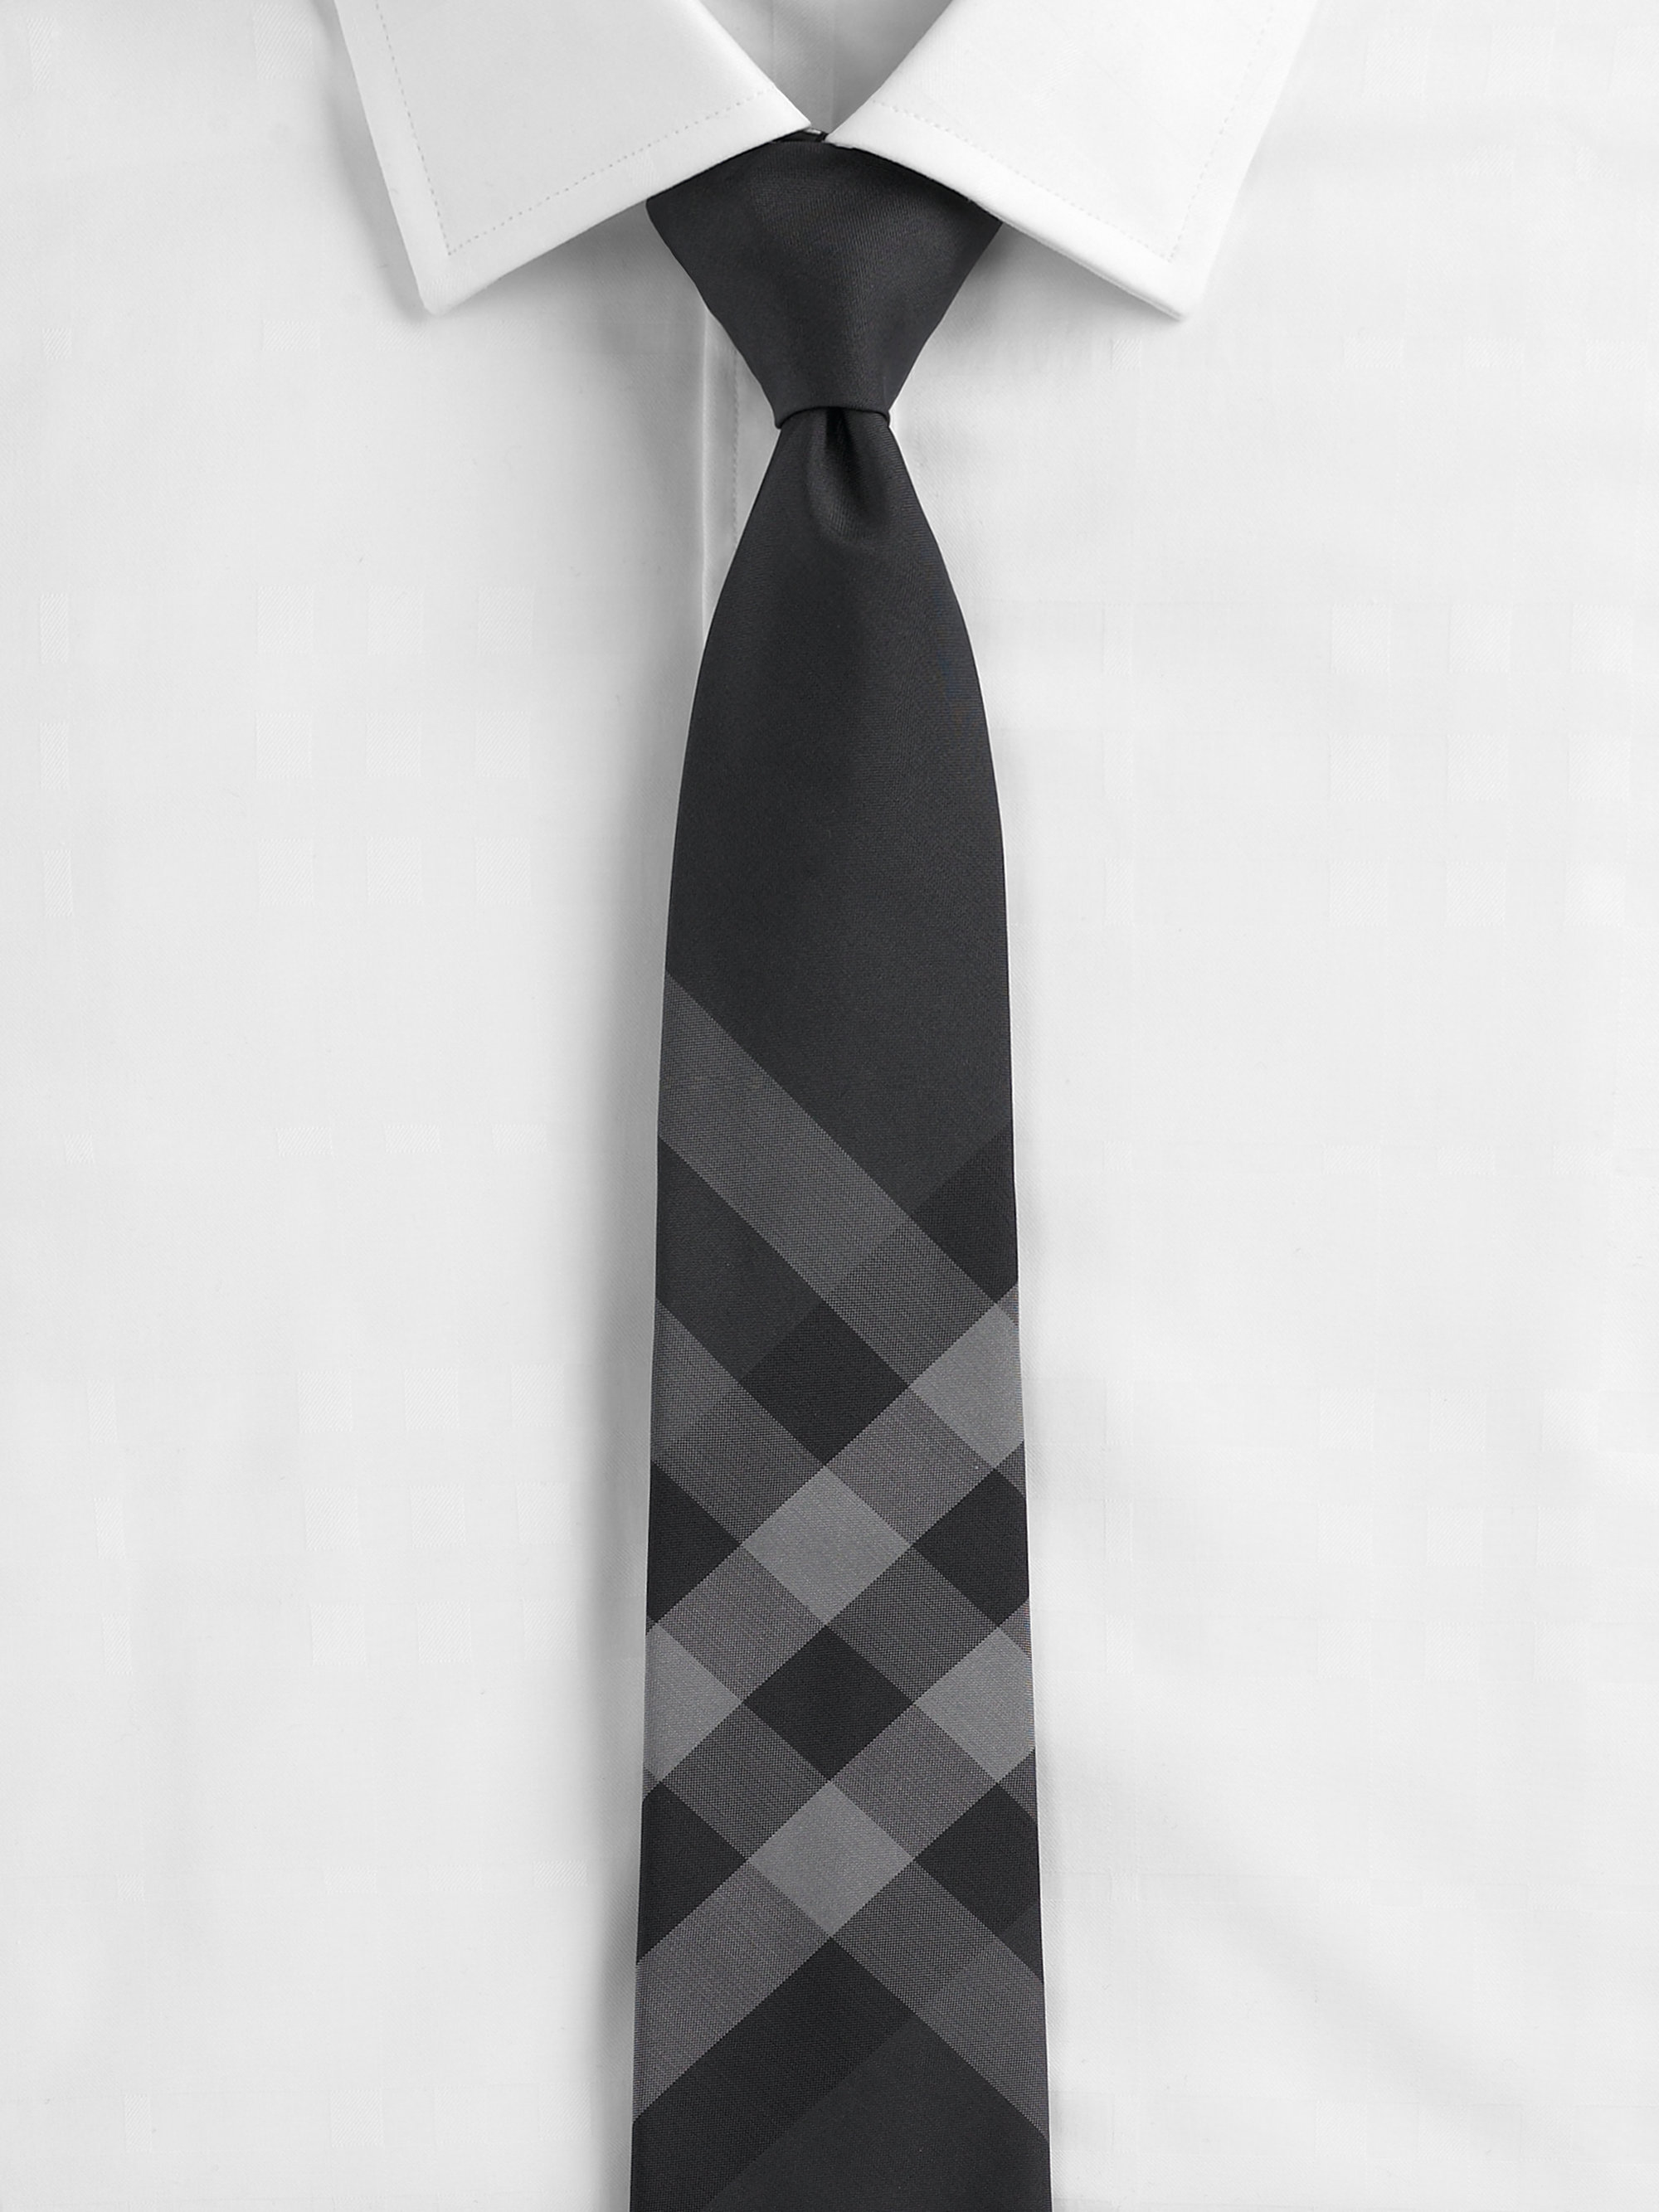 grey burberry tie